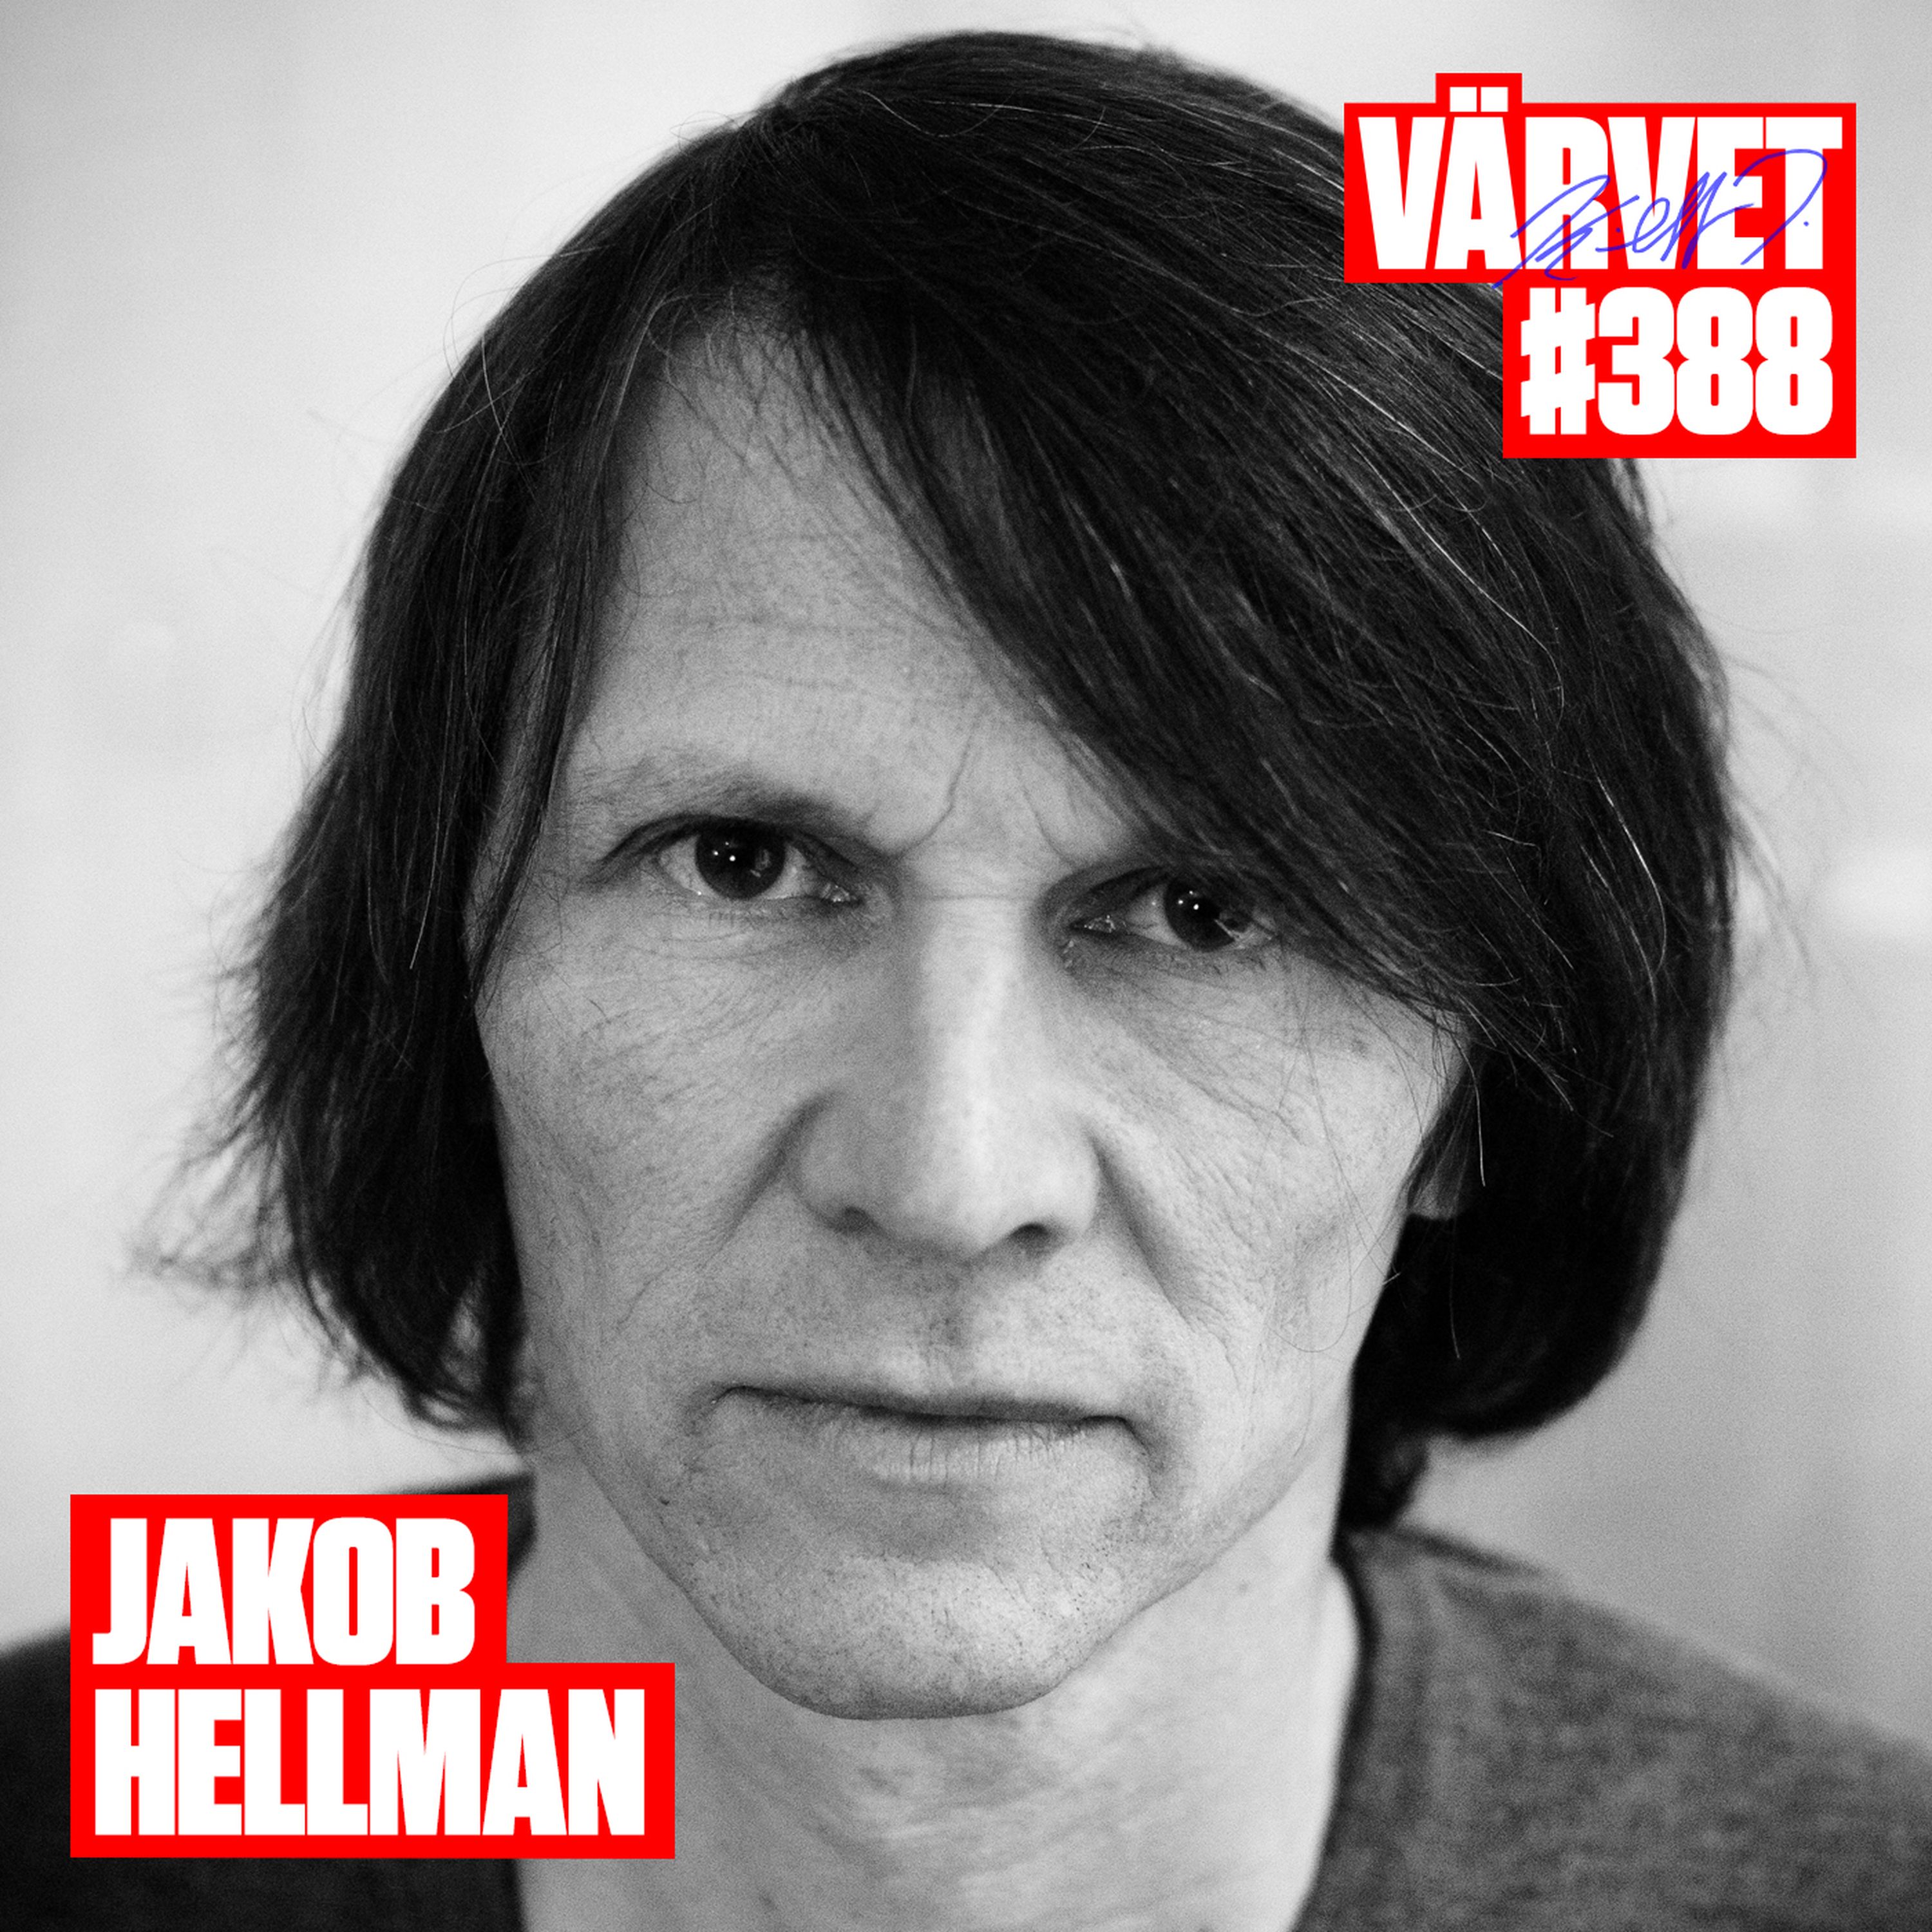 KORT VERSION - #388: Jakob Hellman